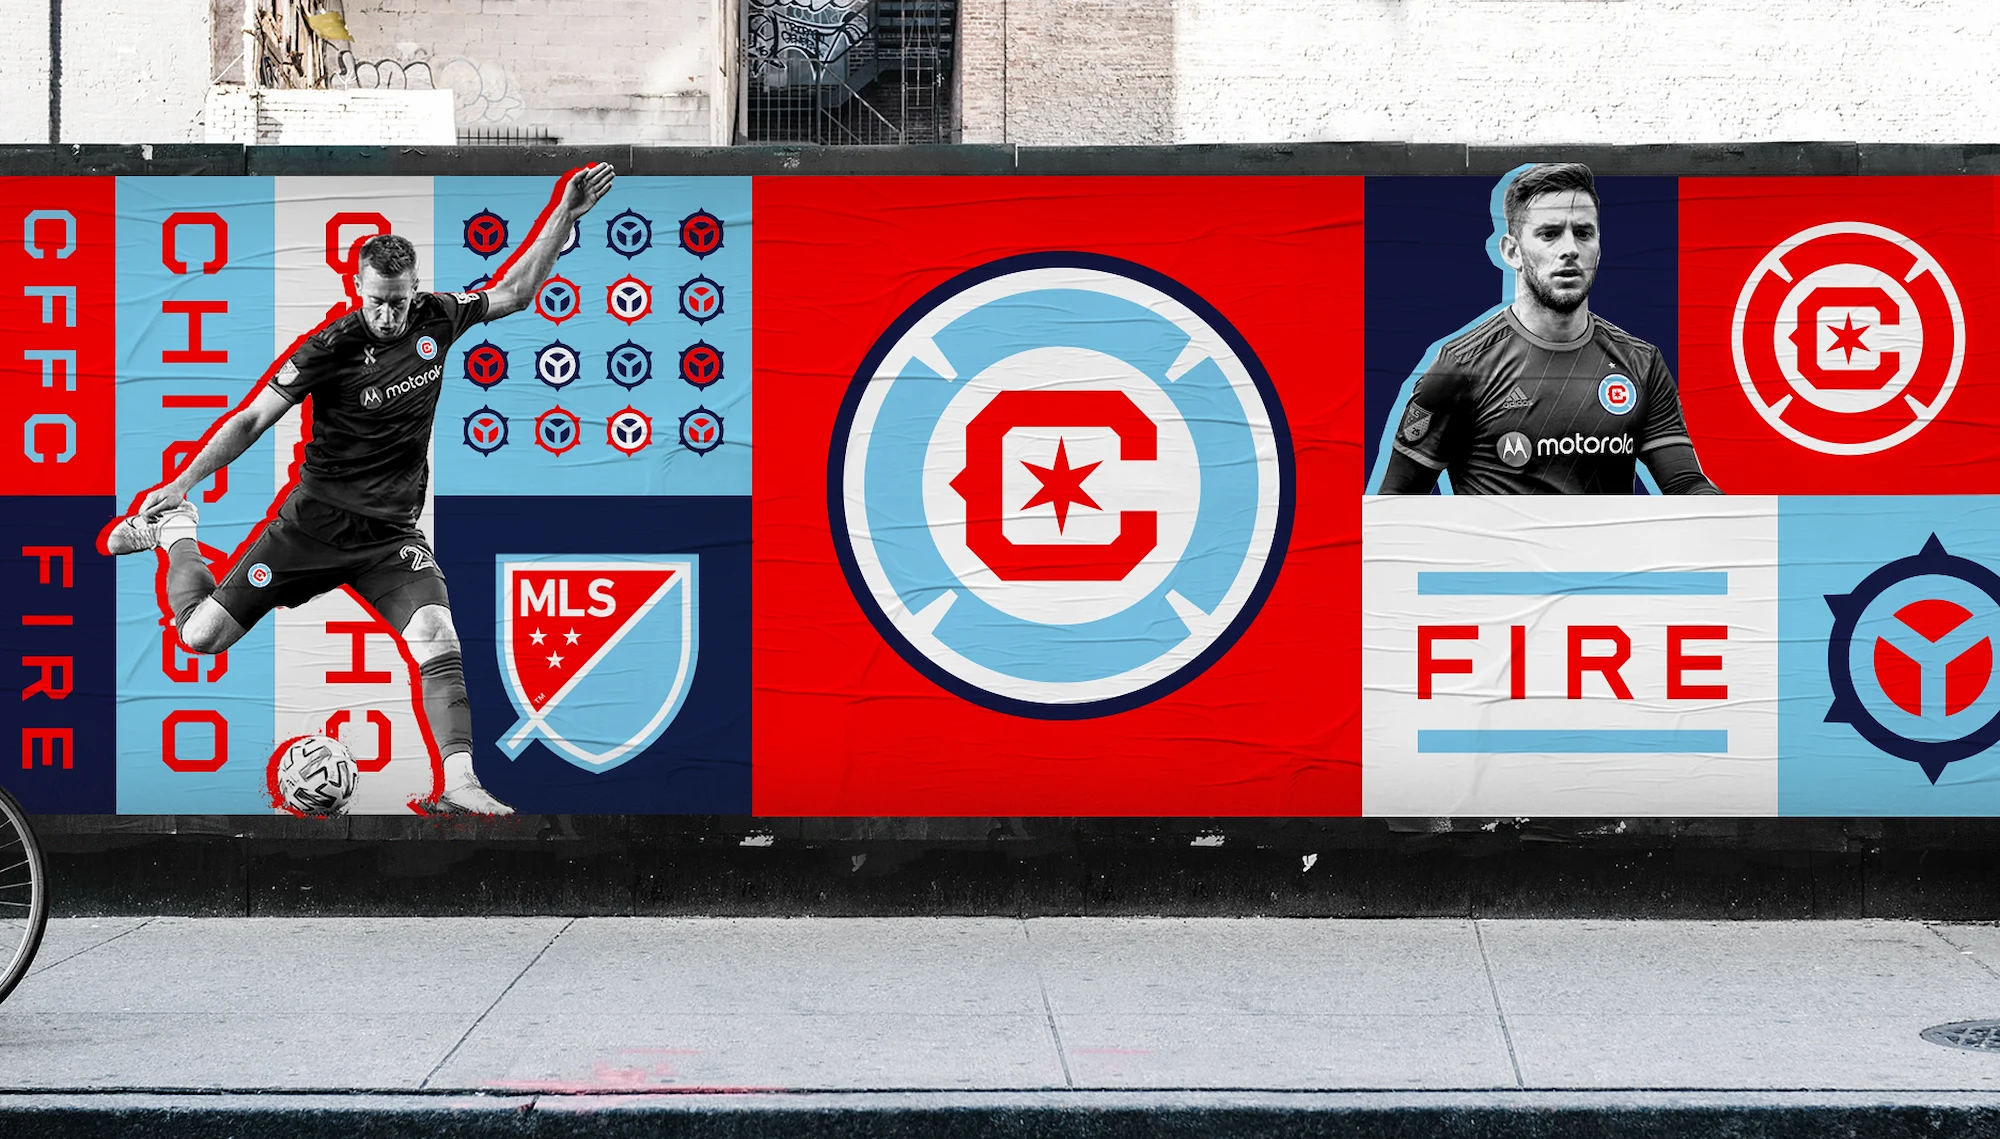 Chicago Fire FC – Branding, Quelle: MLS